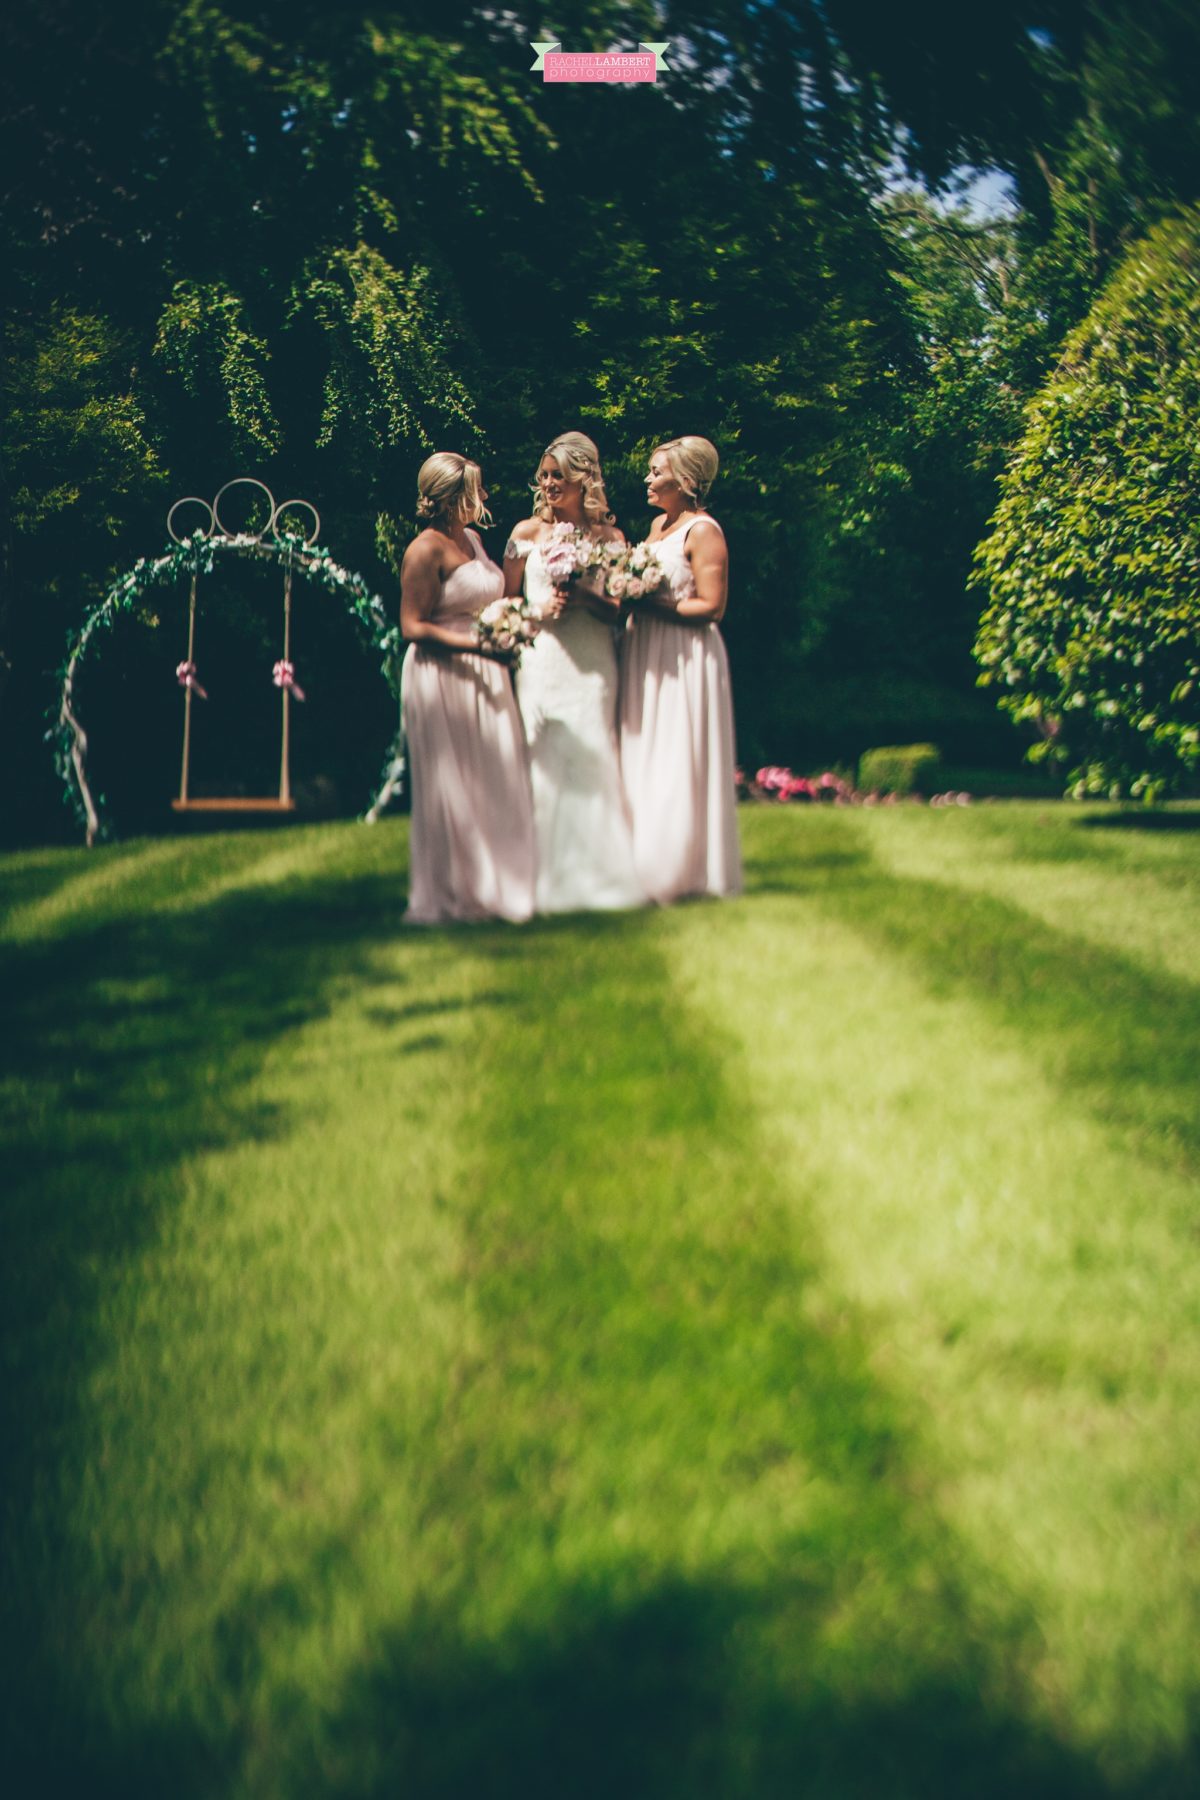 rachel lambert photography decourcey's manor wedding photographer bride and bridesmaids